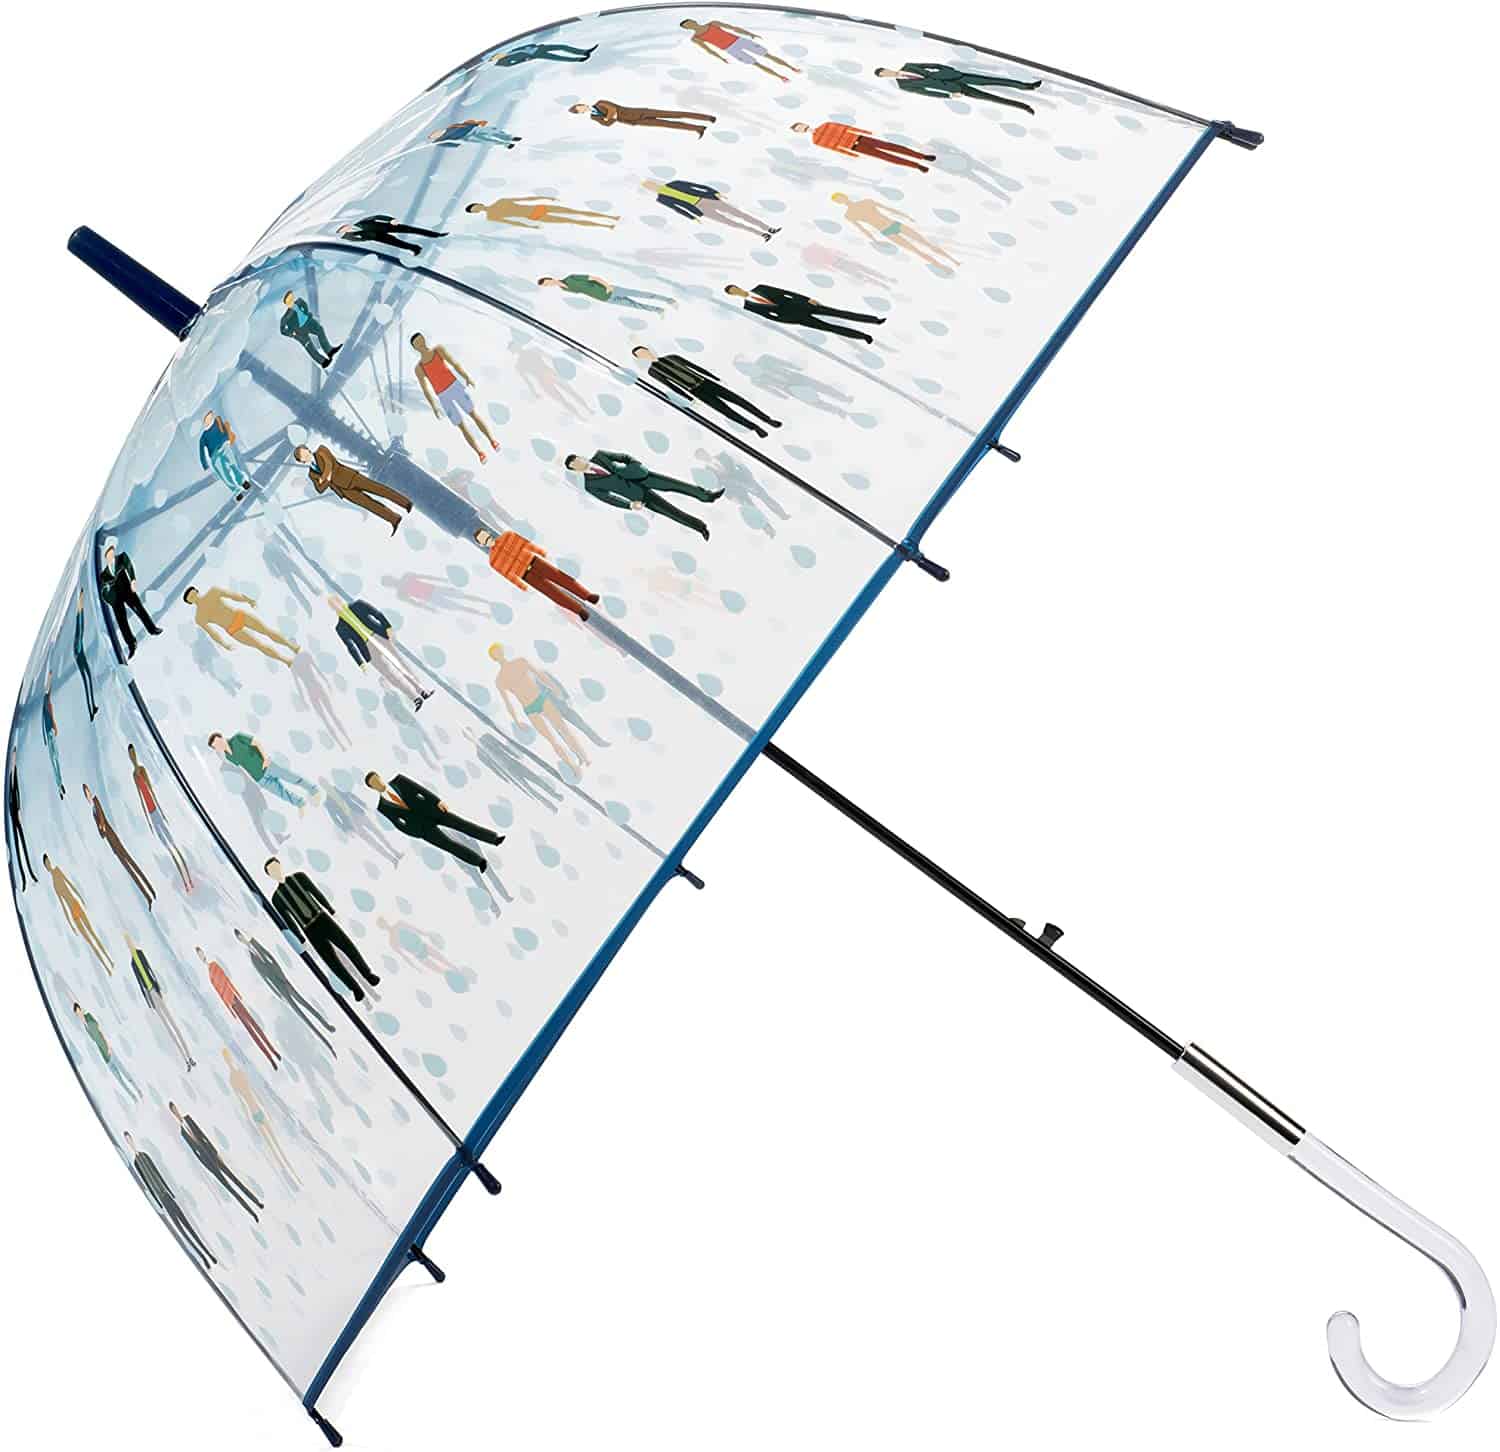 Raining Men Umbrella, Funny Christmas Gift 